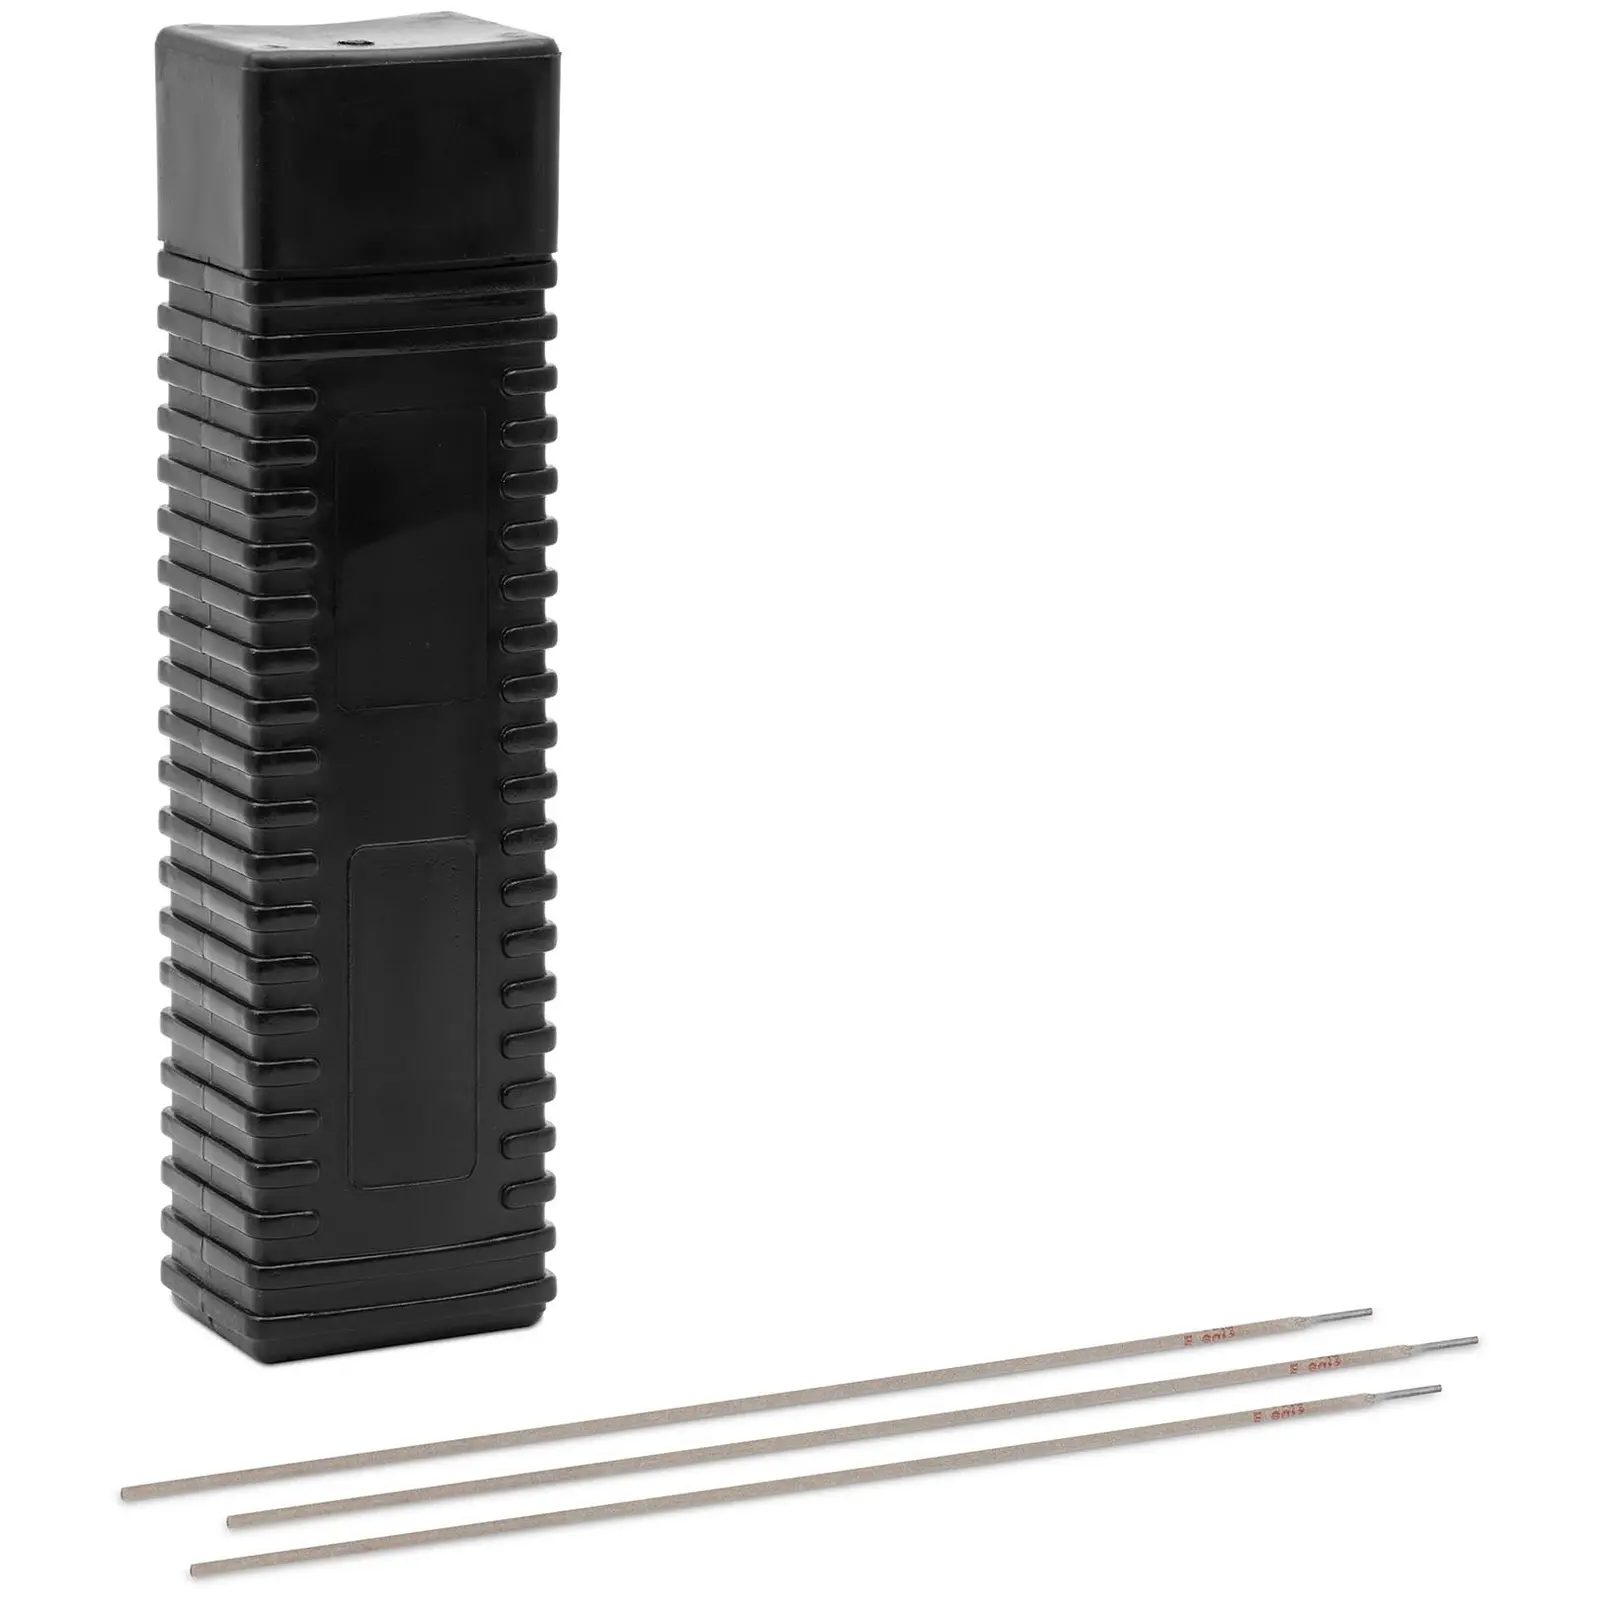 Elettrodi per saldatura - Per acciai da costruzione - E6013 - Rutile-cellulosa - Ø 2.5 x 350 mm - 5 kg